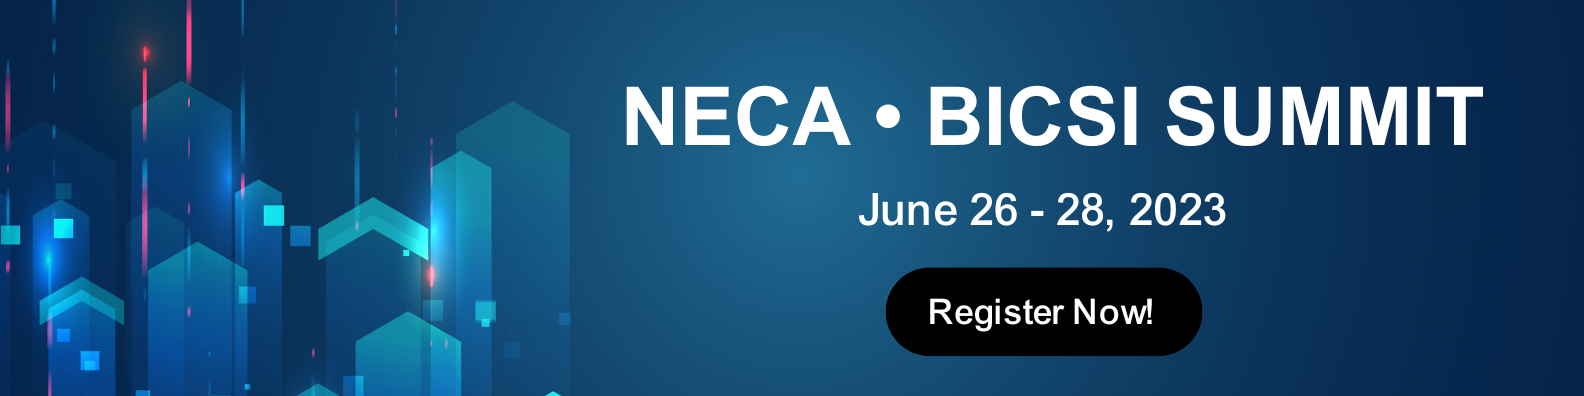 NECA-BICSI Summit Banner